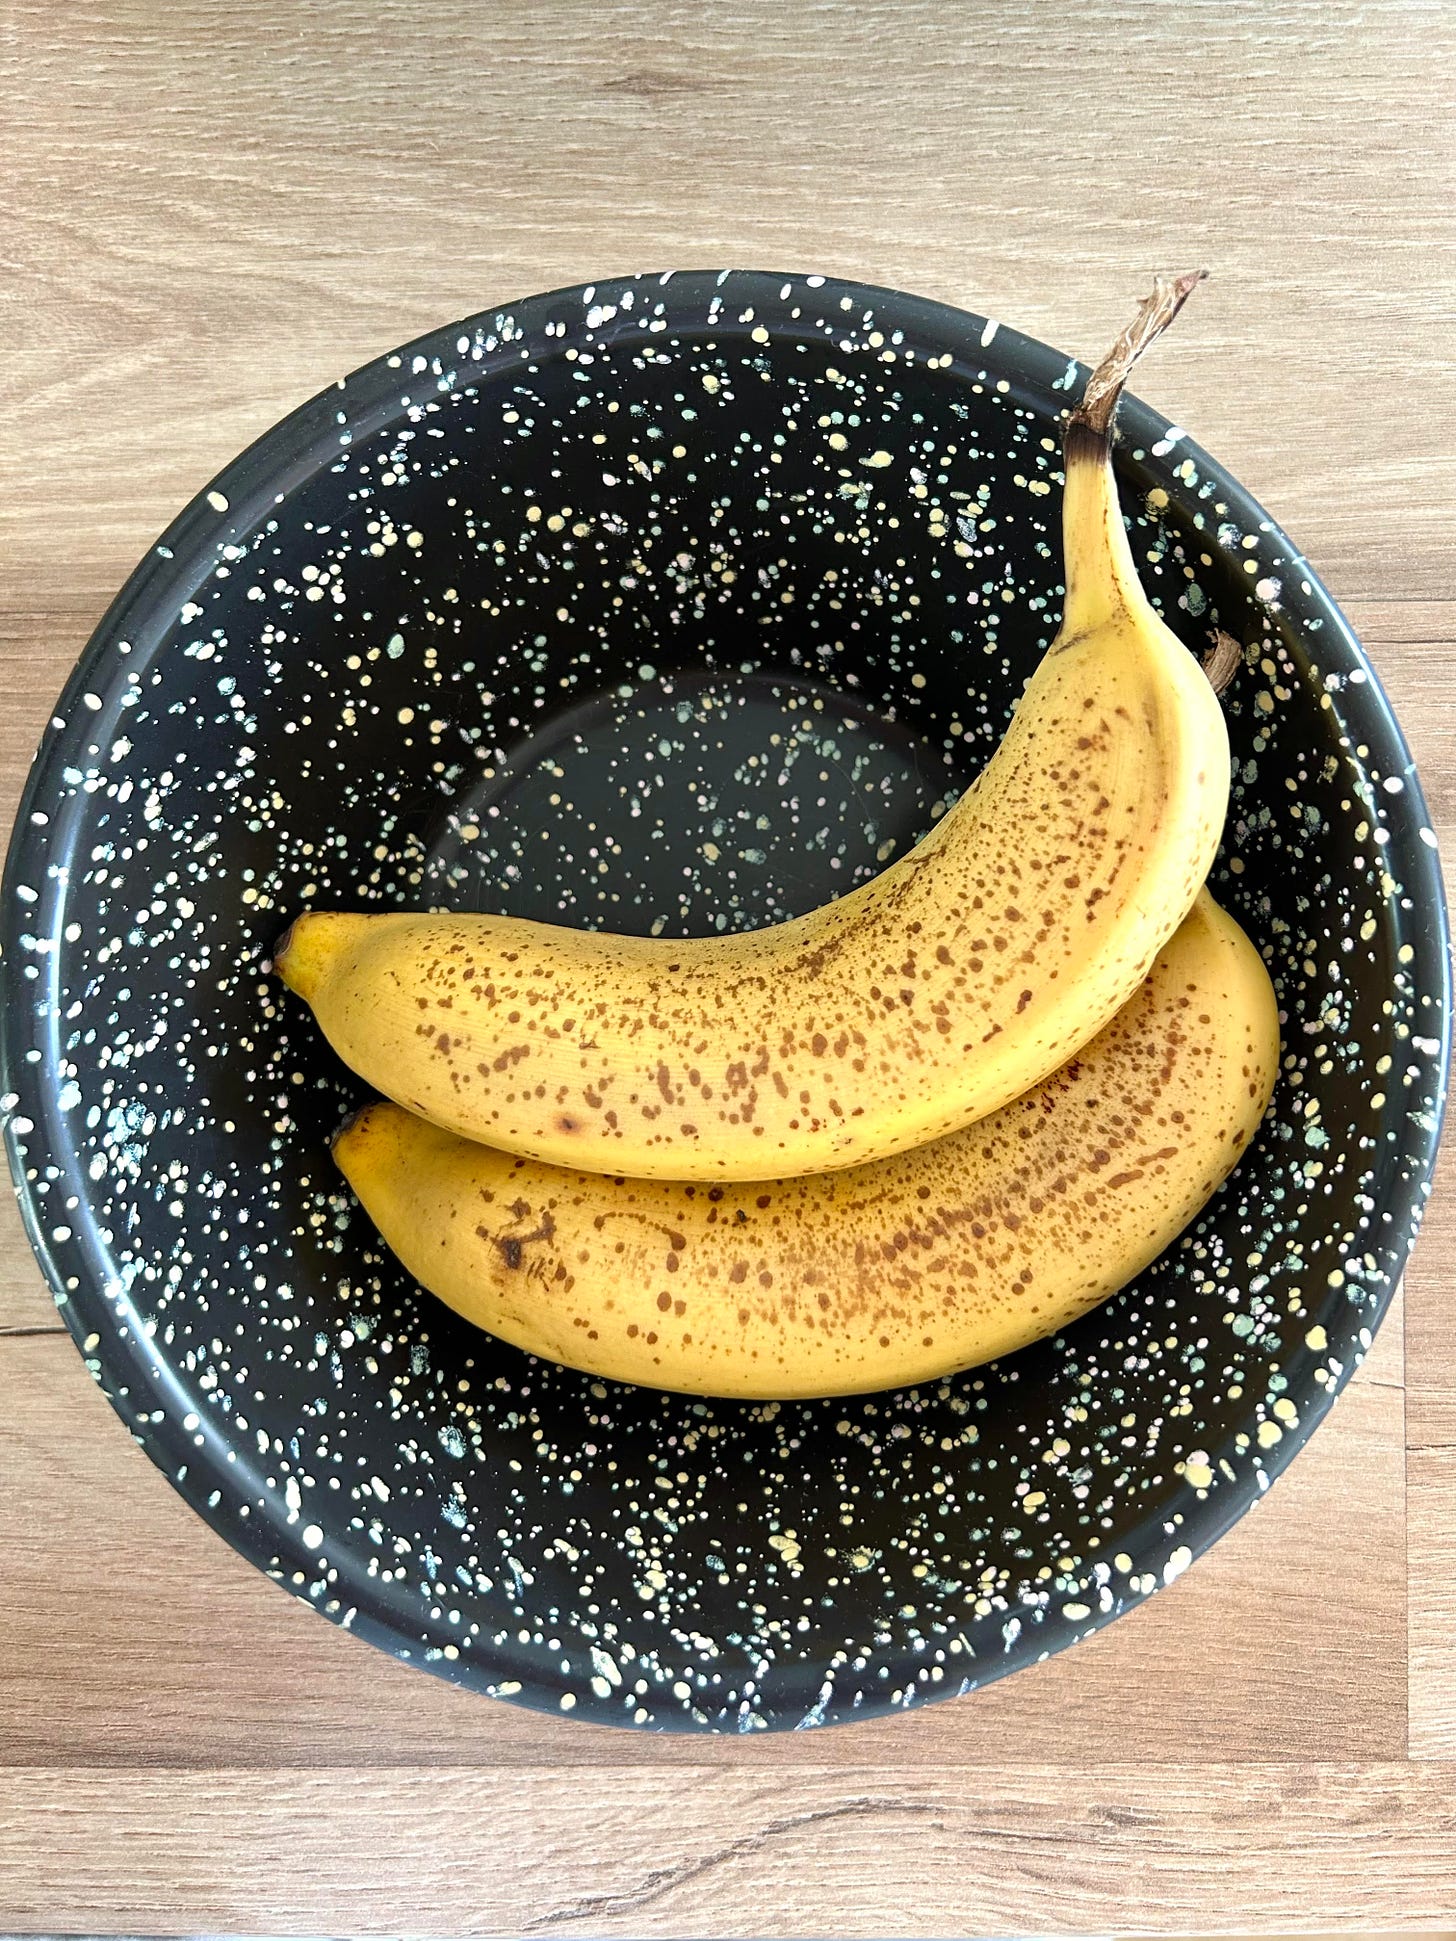 Bananas in a fruit bowl